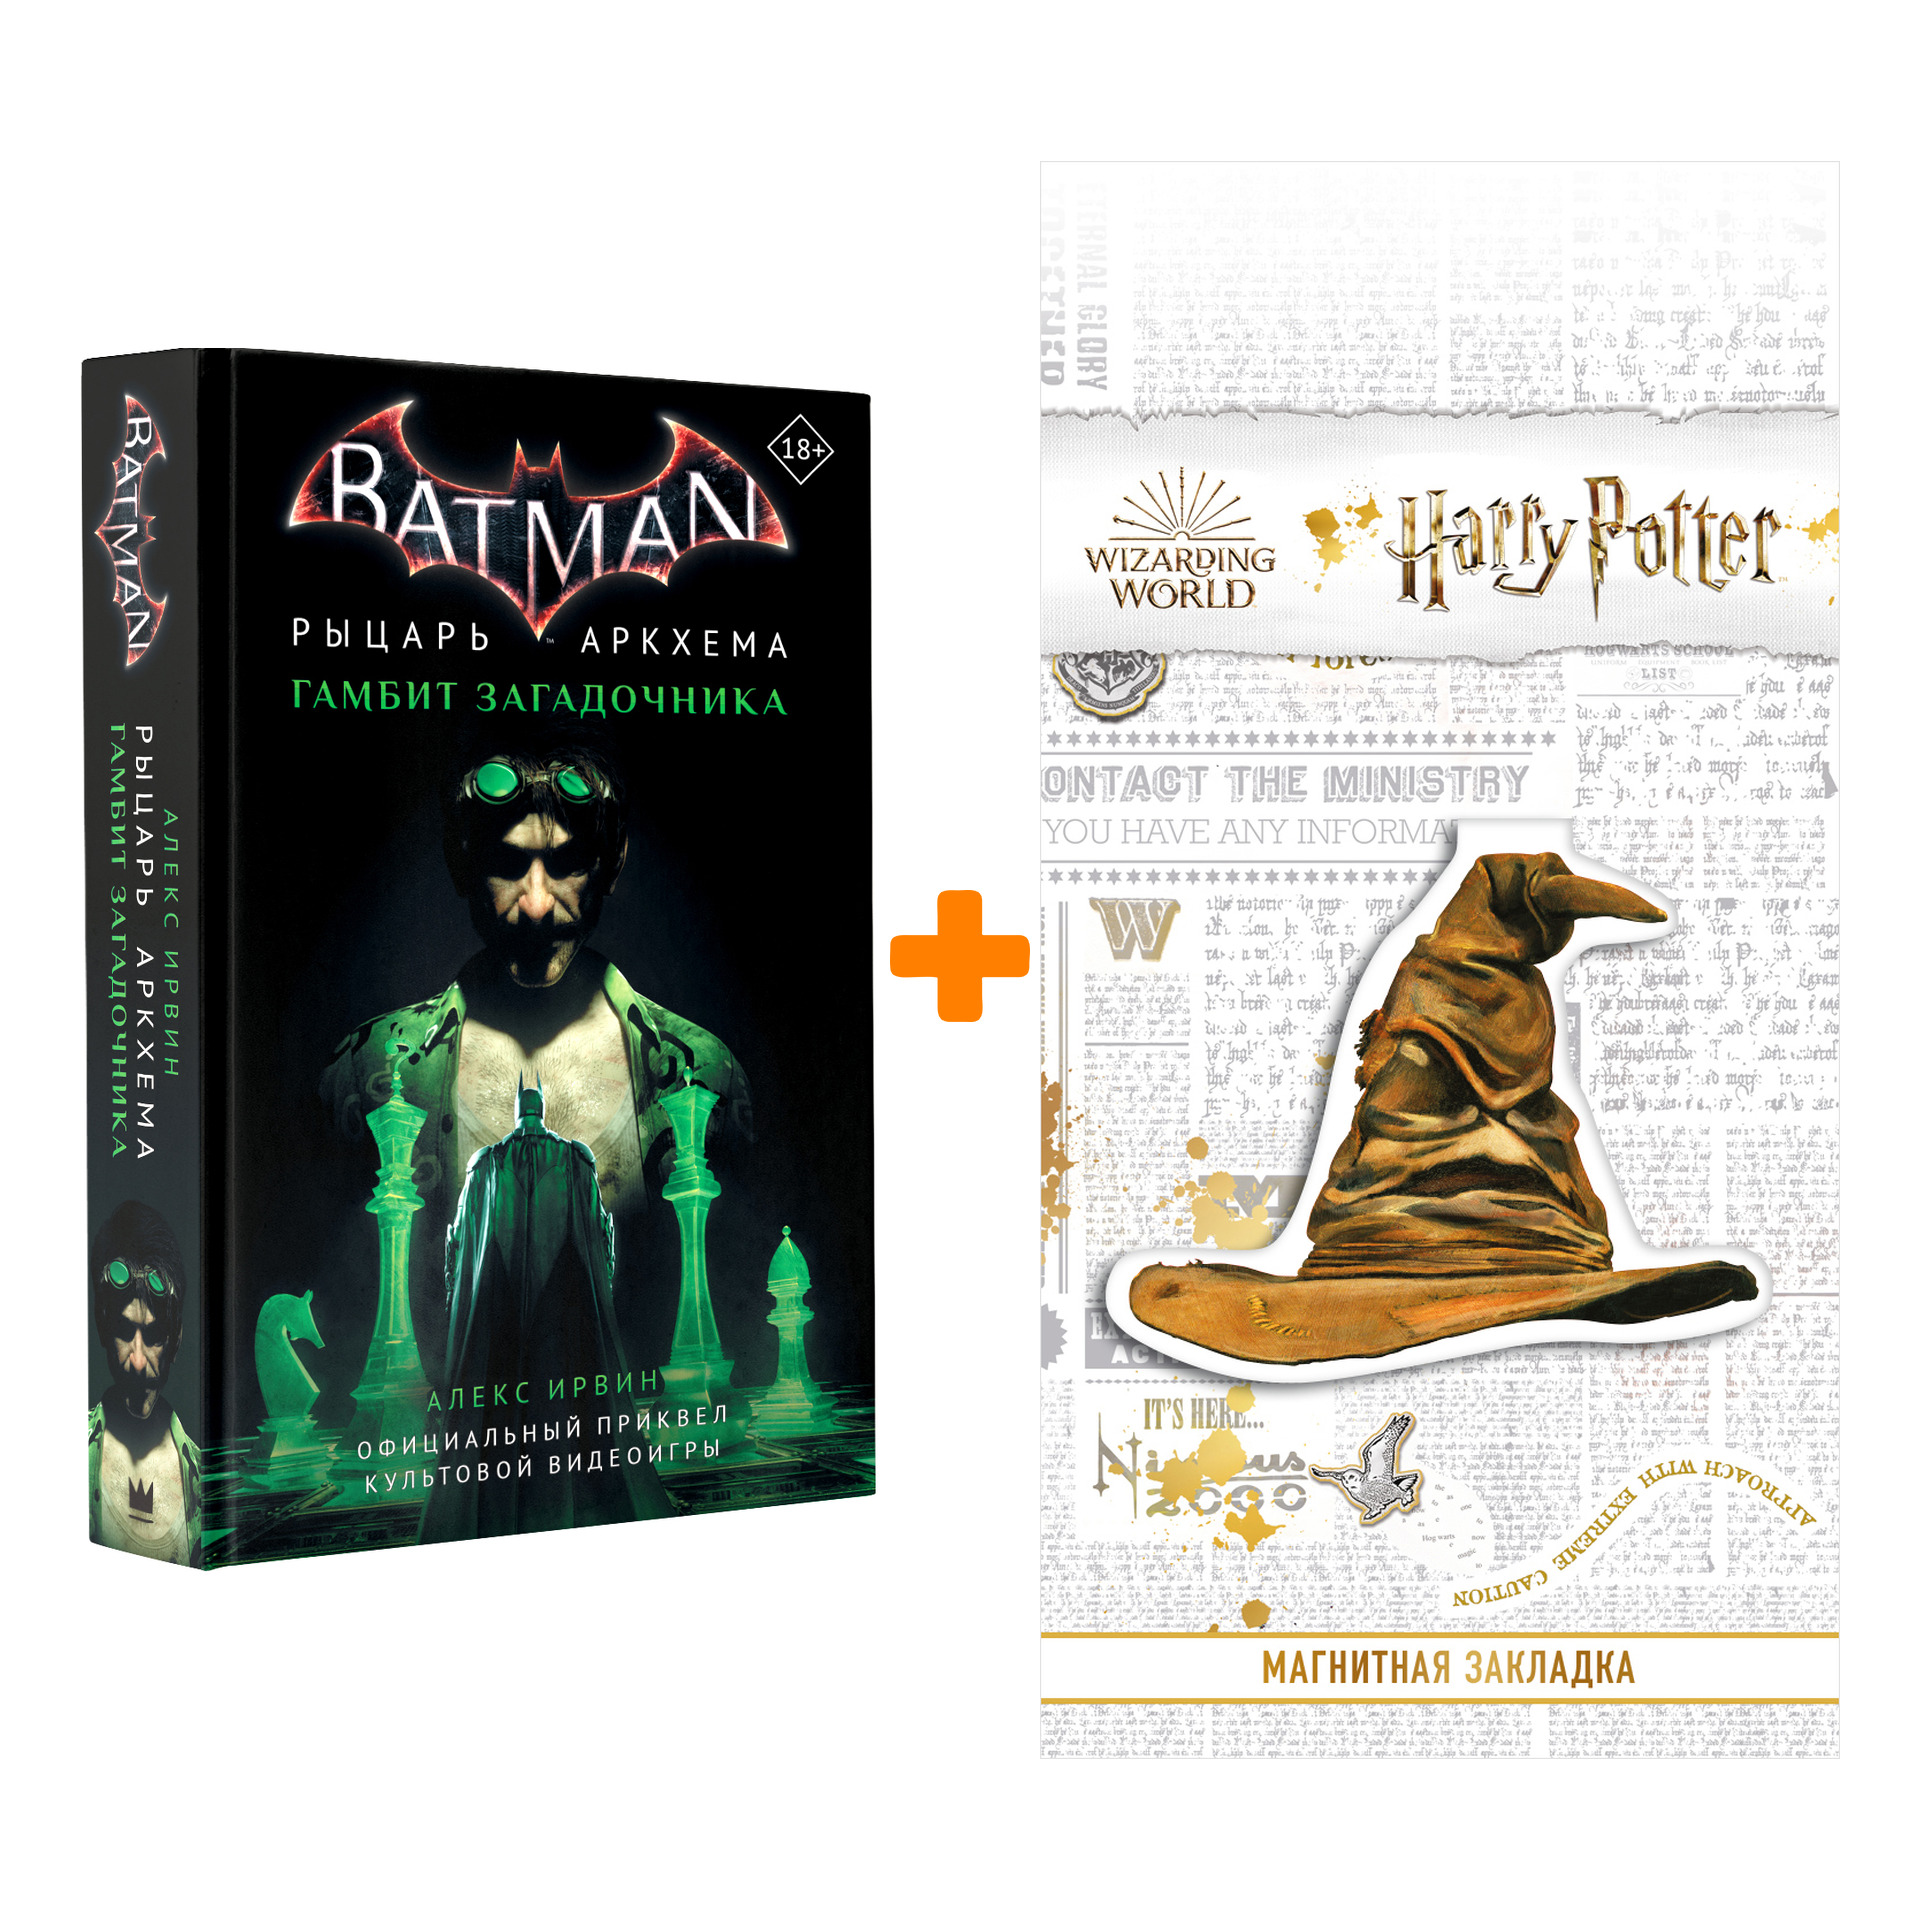 Набор Бэтмен Рыцарь Аркхема Гамбит Загадочника + Закладка Harry Potter Распределяющая шляпа магнитная